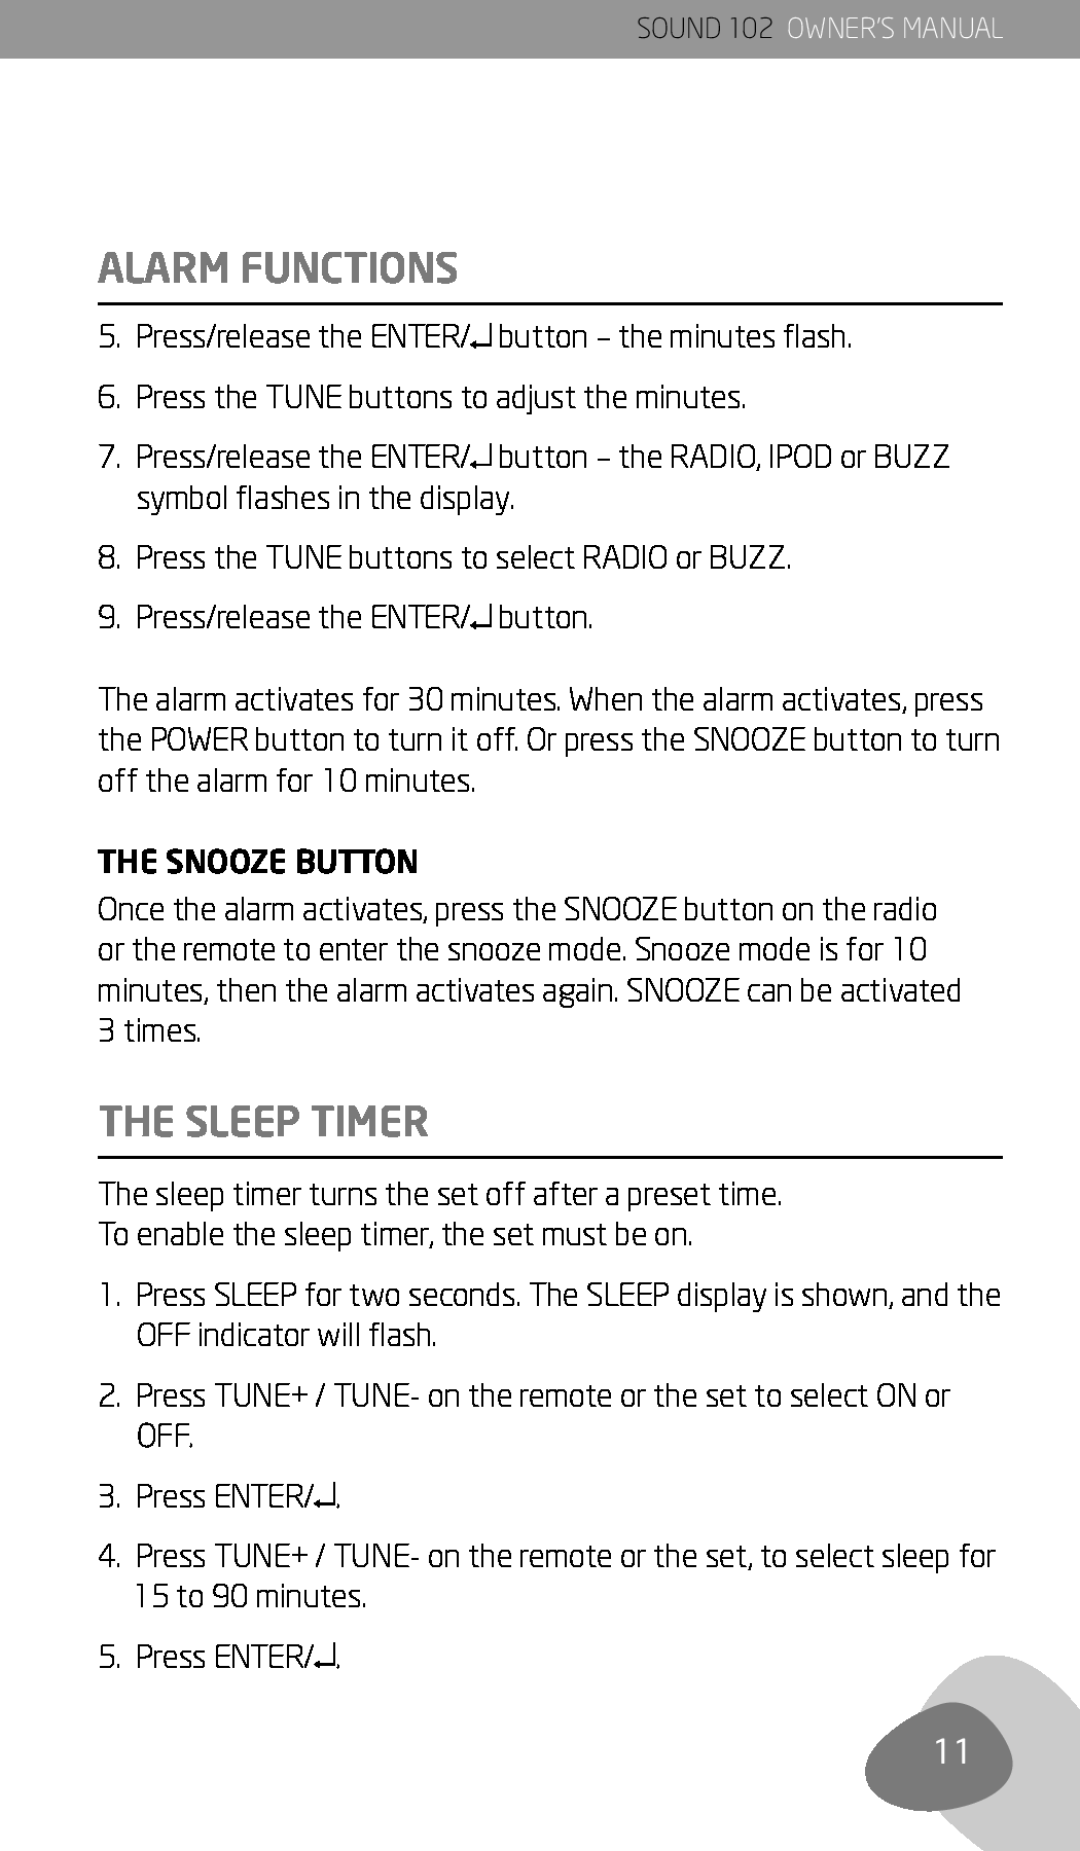 Eton 102 owner manual The Sleep Timer, Alarm Functions 